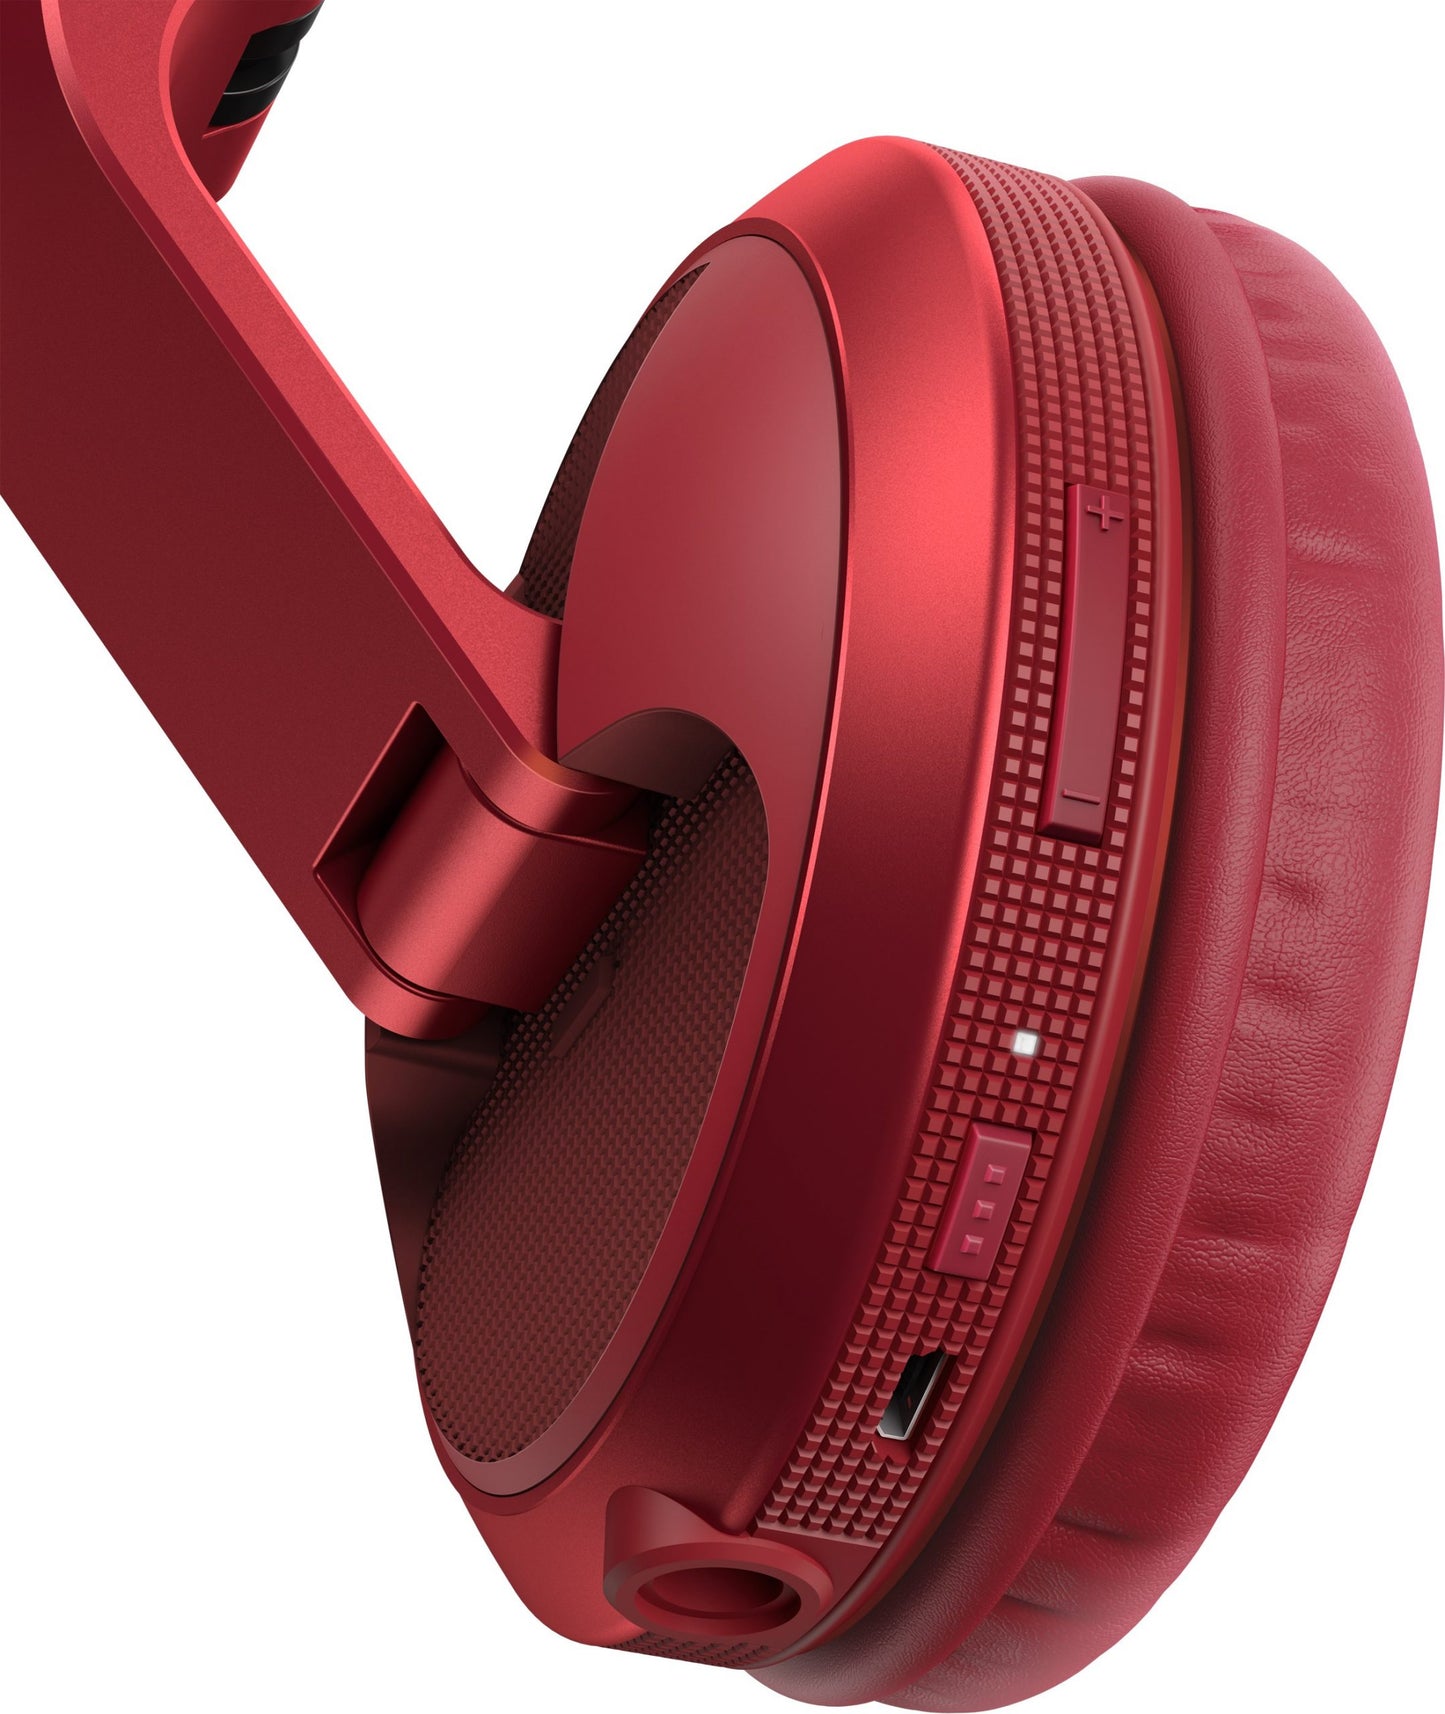 Pioneer DJ HDJ-X5BT-R Over-ear DJ headphones with Bluetooth® functionality - Red